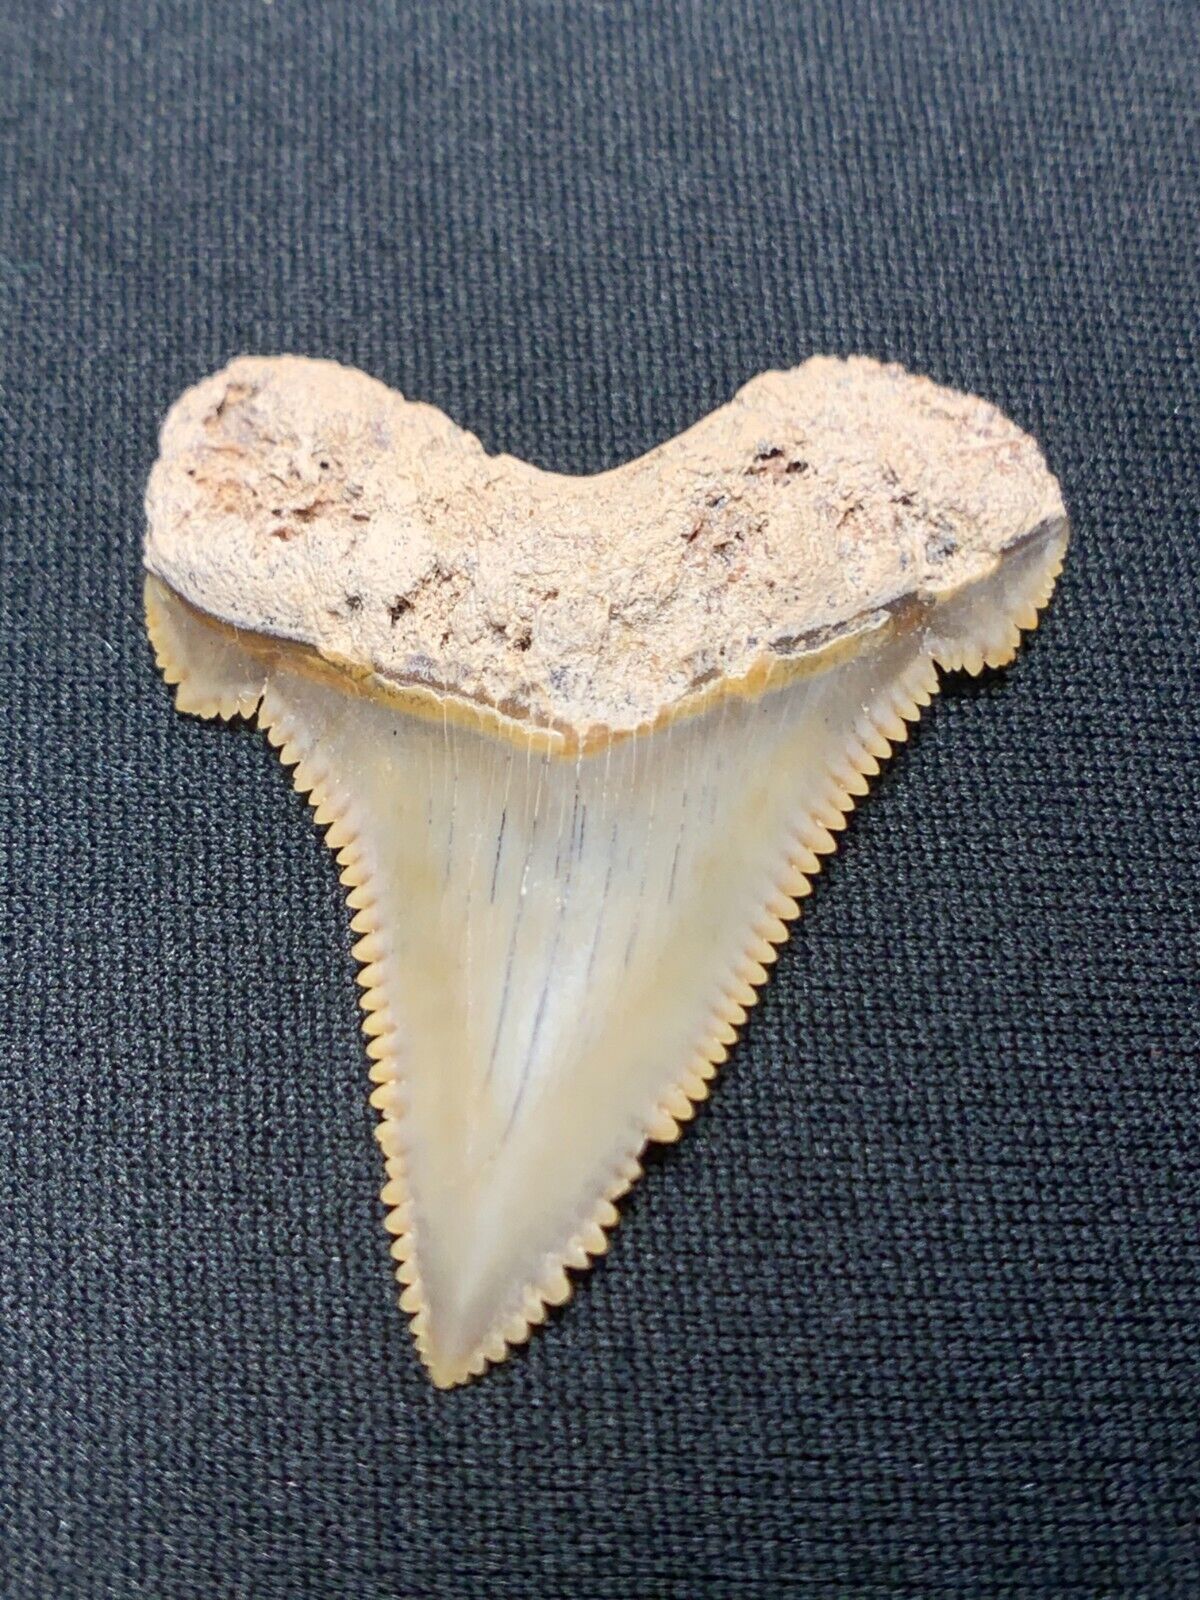 Razor Sharp Angustidens Shark Tooth with Slight Root Pitting